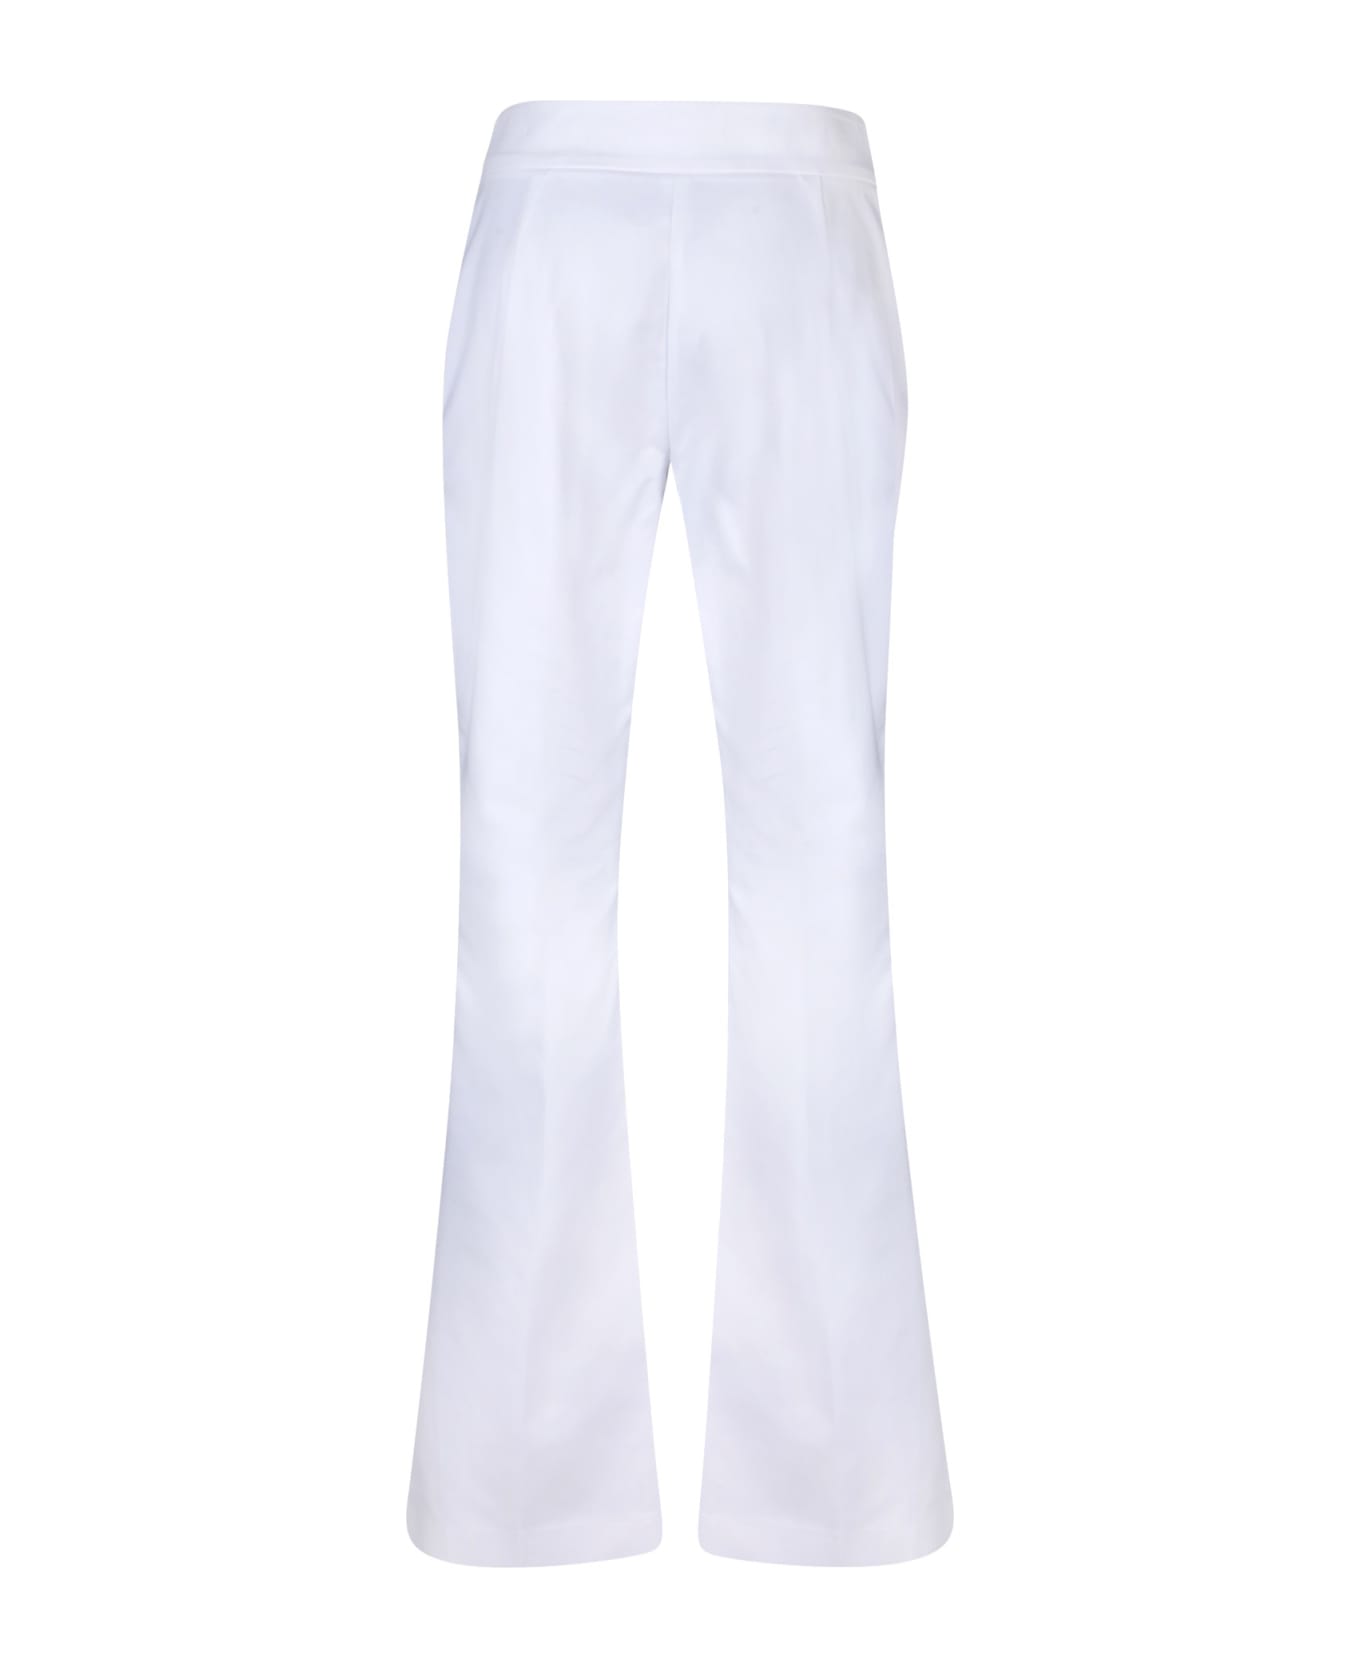 Genny White Cotton Hopper Trousers - White